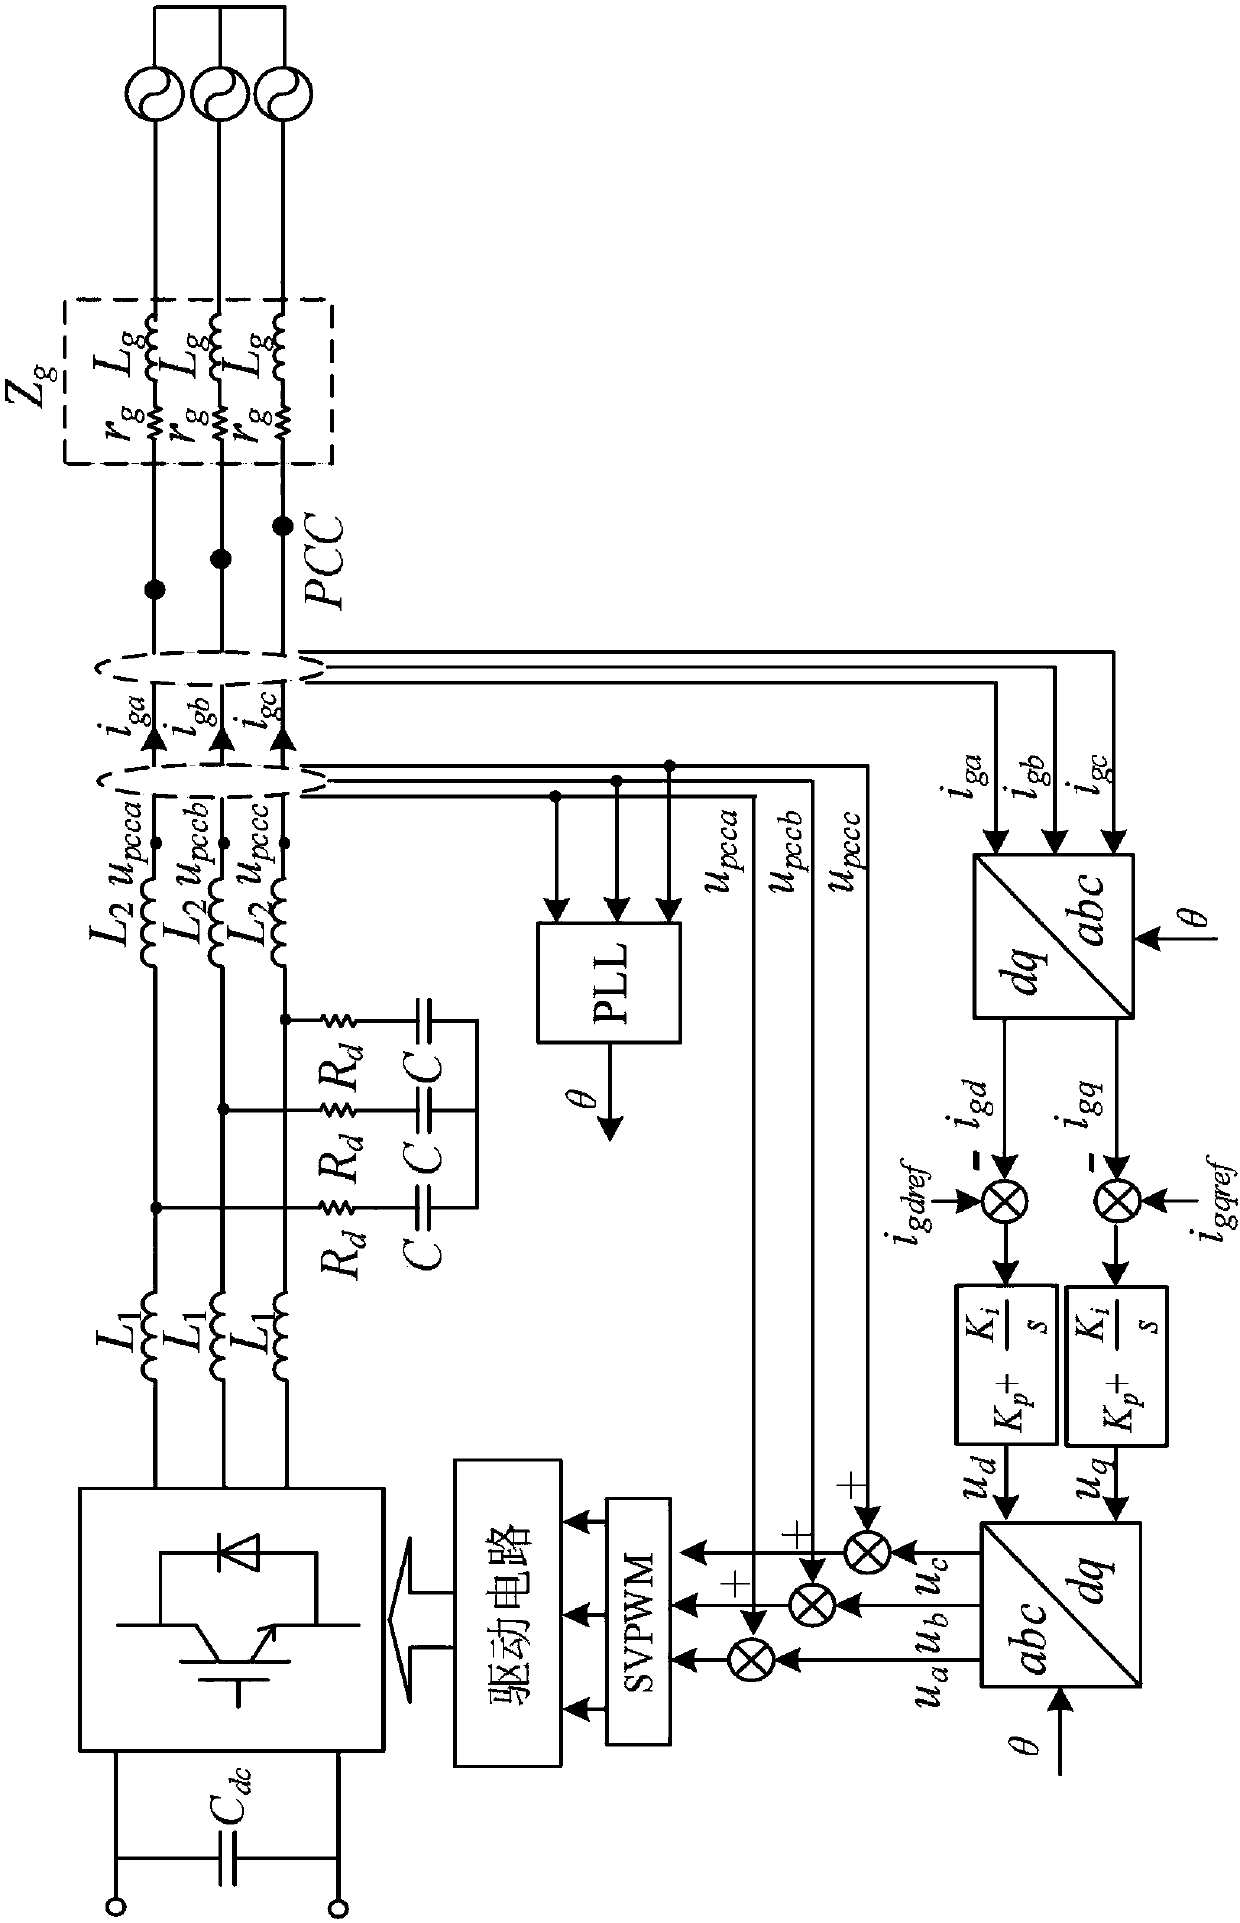 Multi-inverter system stability control method based on mode self-adaption in weak power grid